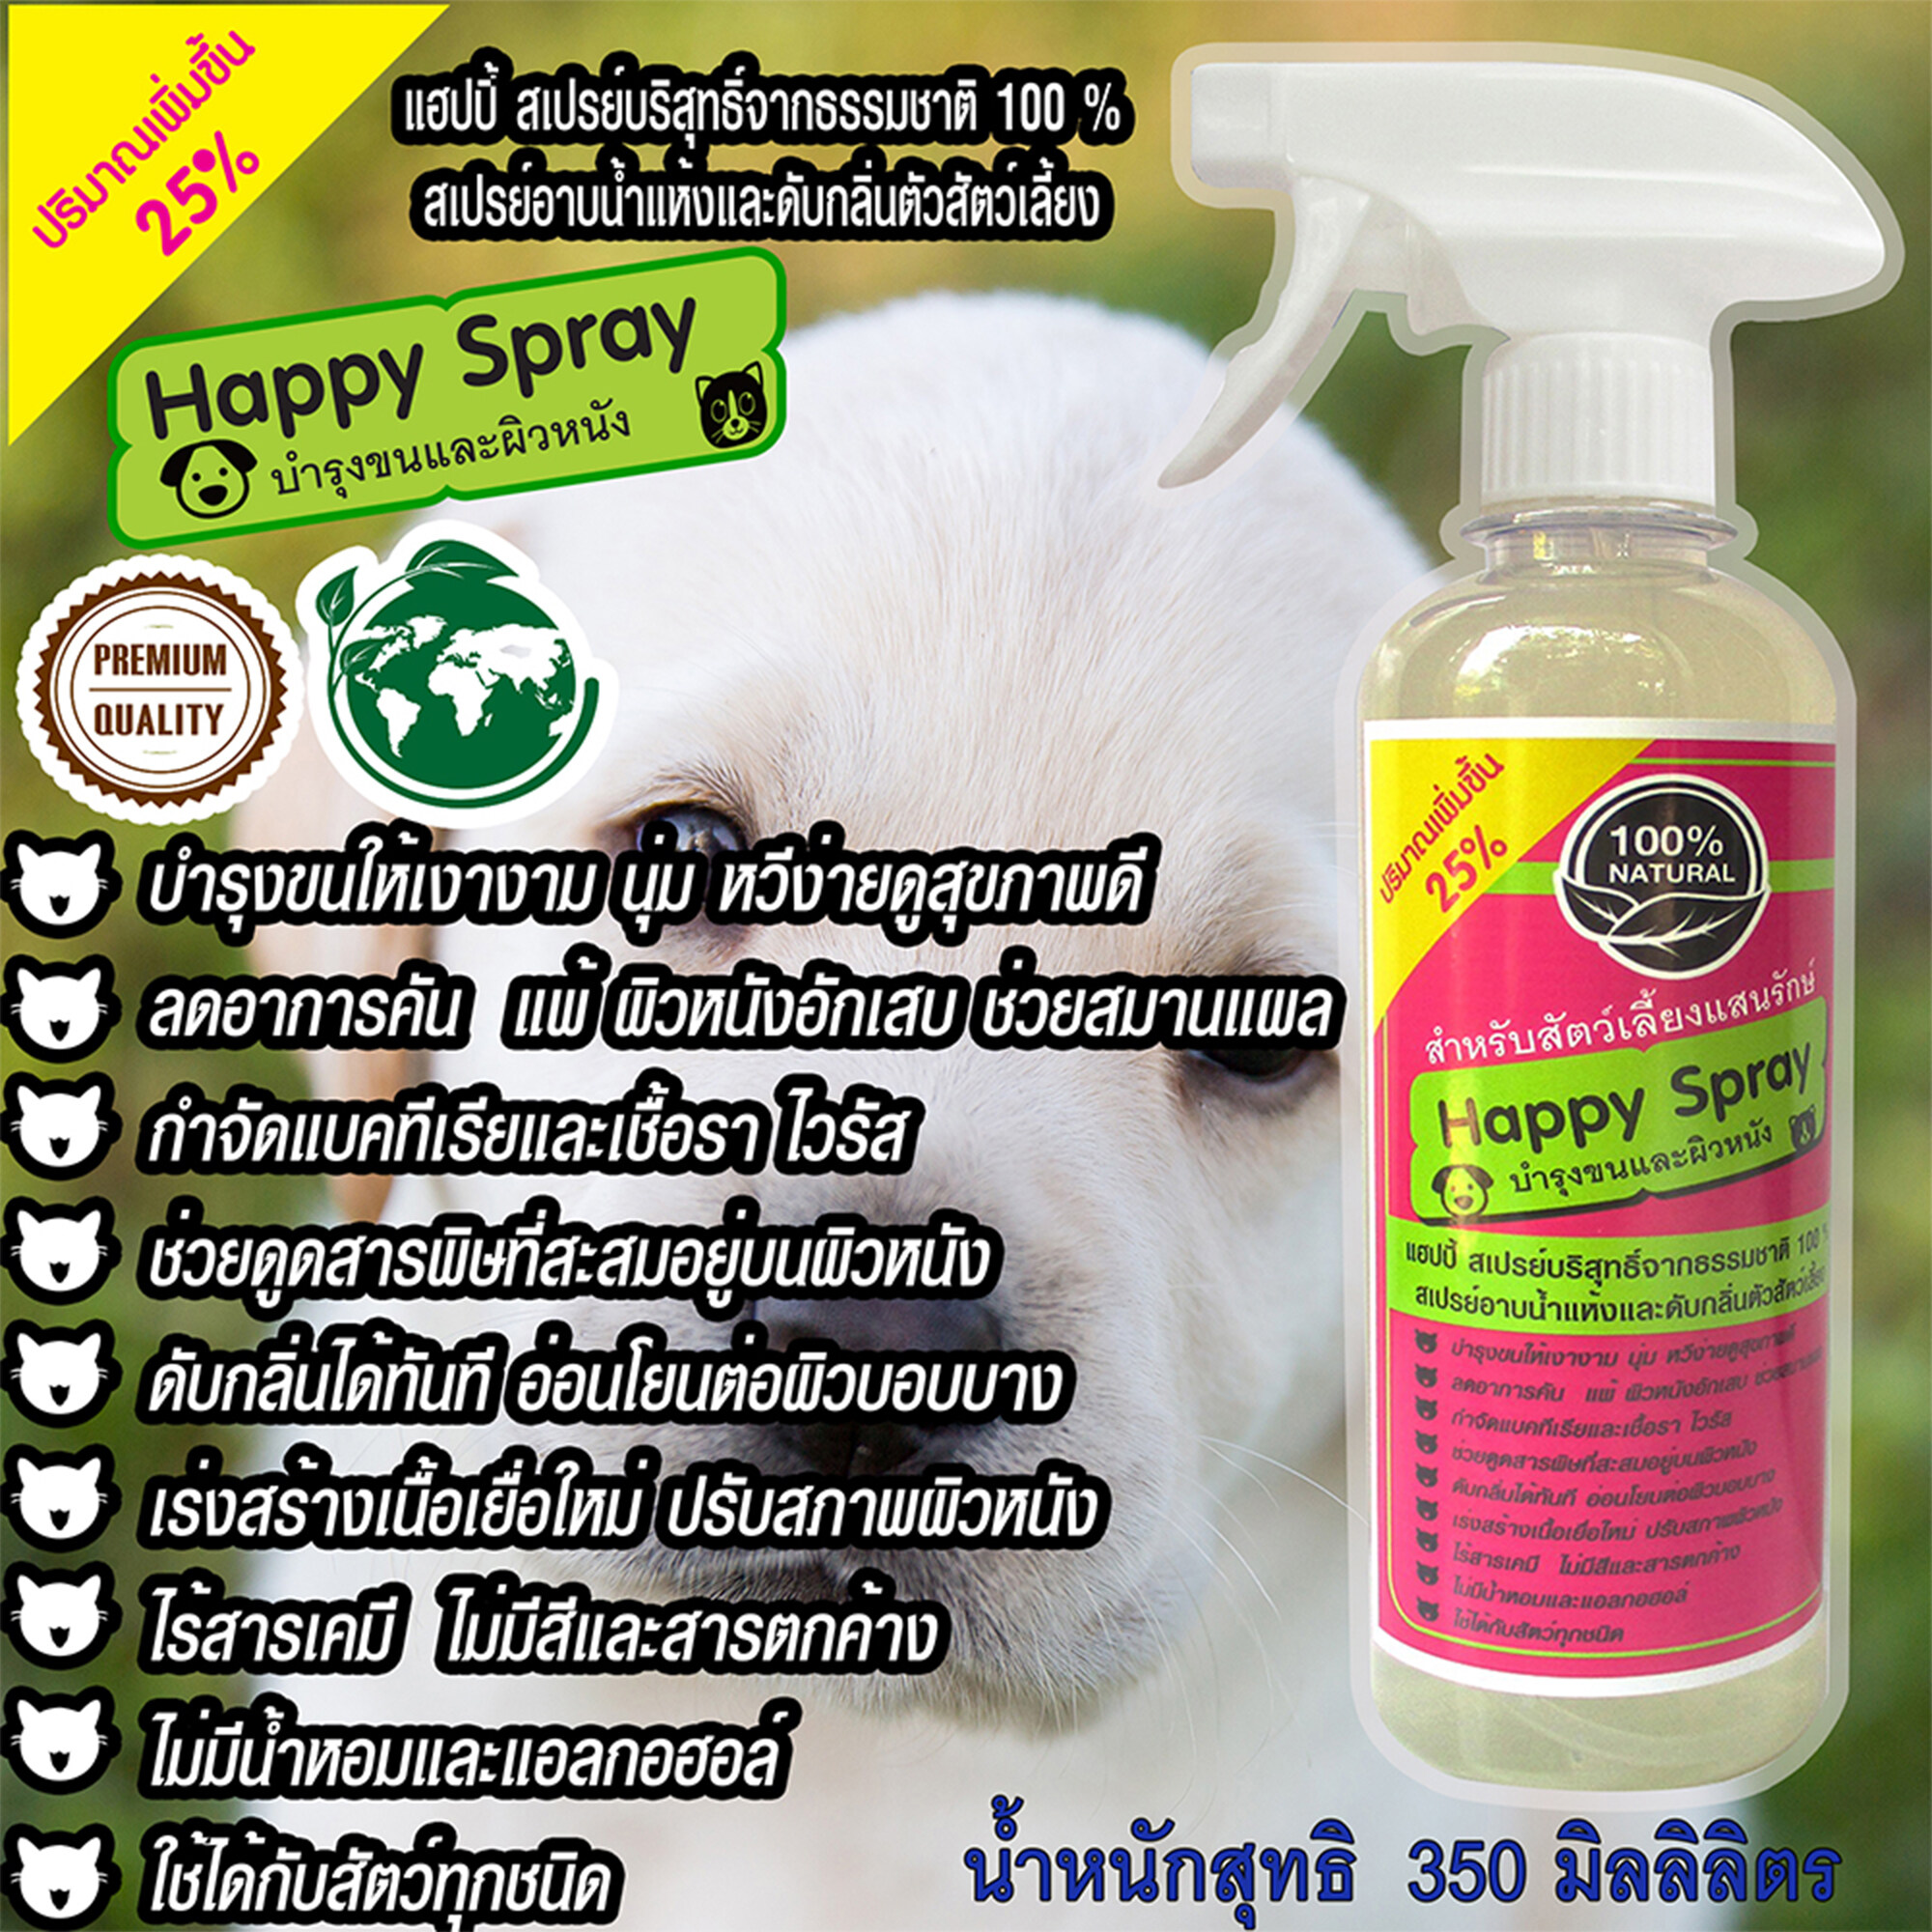 Happy Sprayแฮปปี้ สเปรย์ 350 ml.เปรย์อาบน้ำแห้งและดับกลิ่นตัวหมาแมวและสัตว์ลี้ยงที่มีขนทุกชนิด กลิ่นหอม อาบสะอาด บำรุงขน ลดอาการคัน ไม่ใส่สี